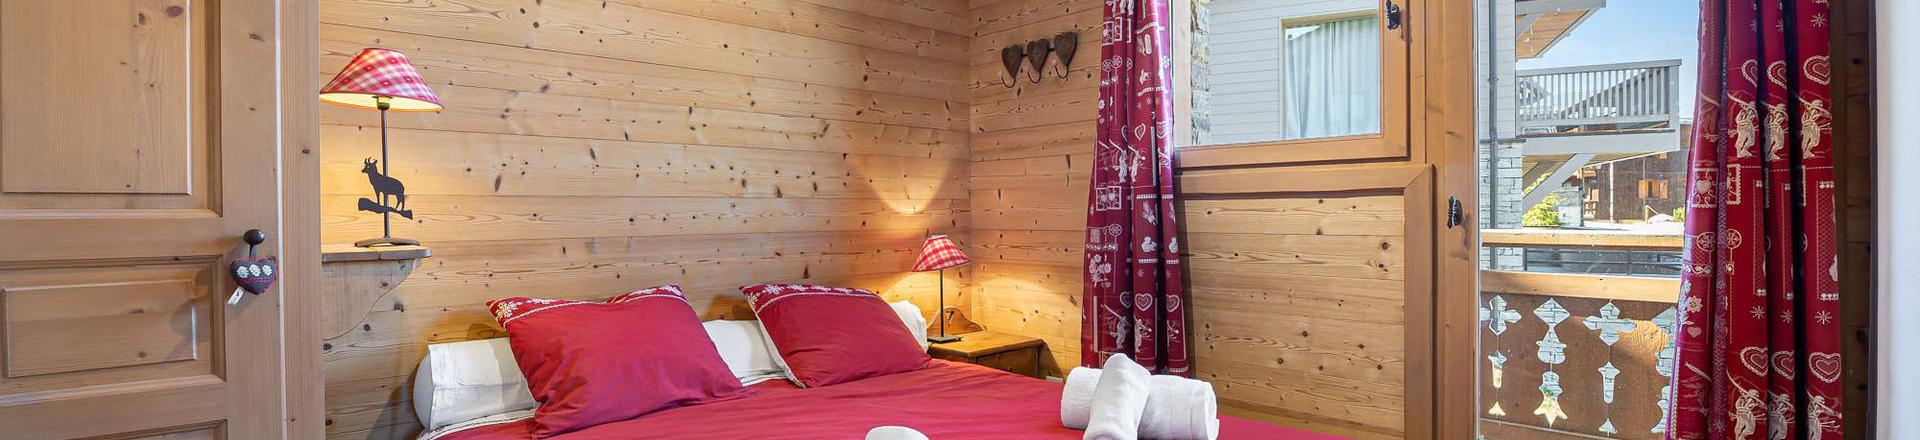 Rent in ski resort 6 room chalet 8 people - Chalet Daï - Courchevel - Bedroom